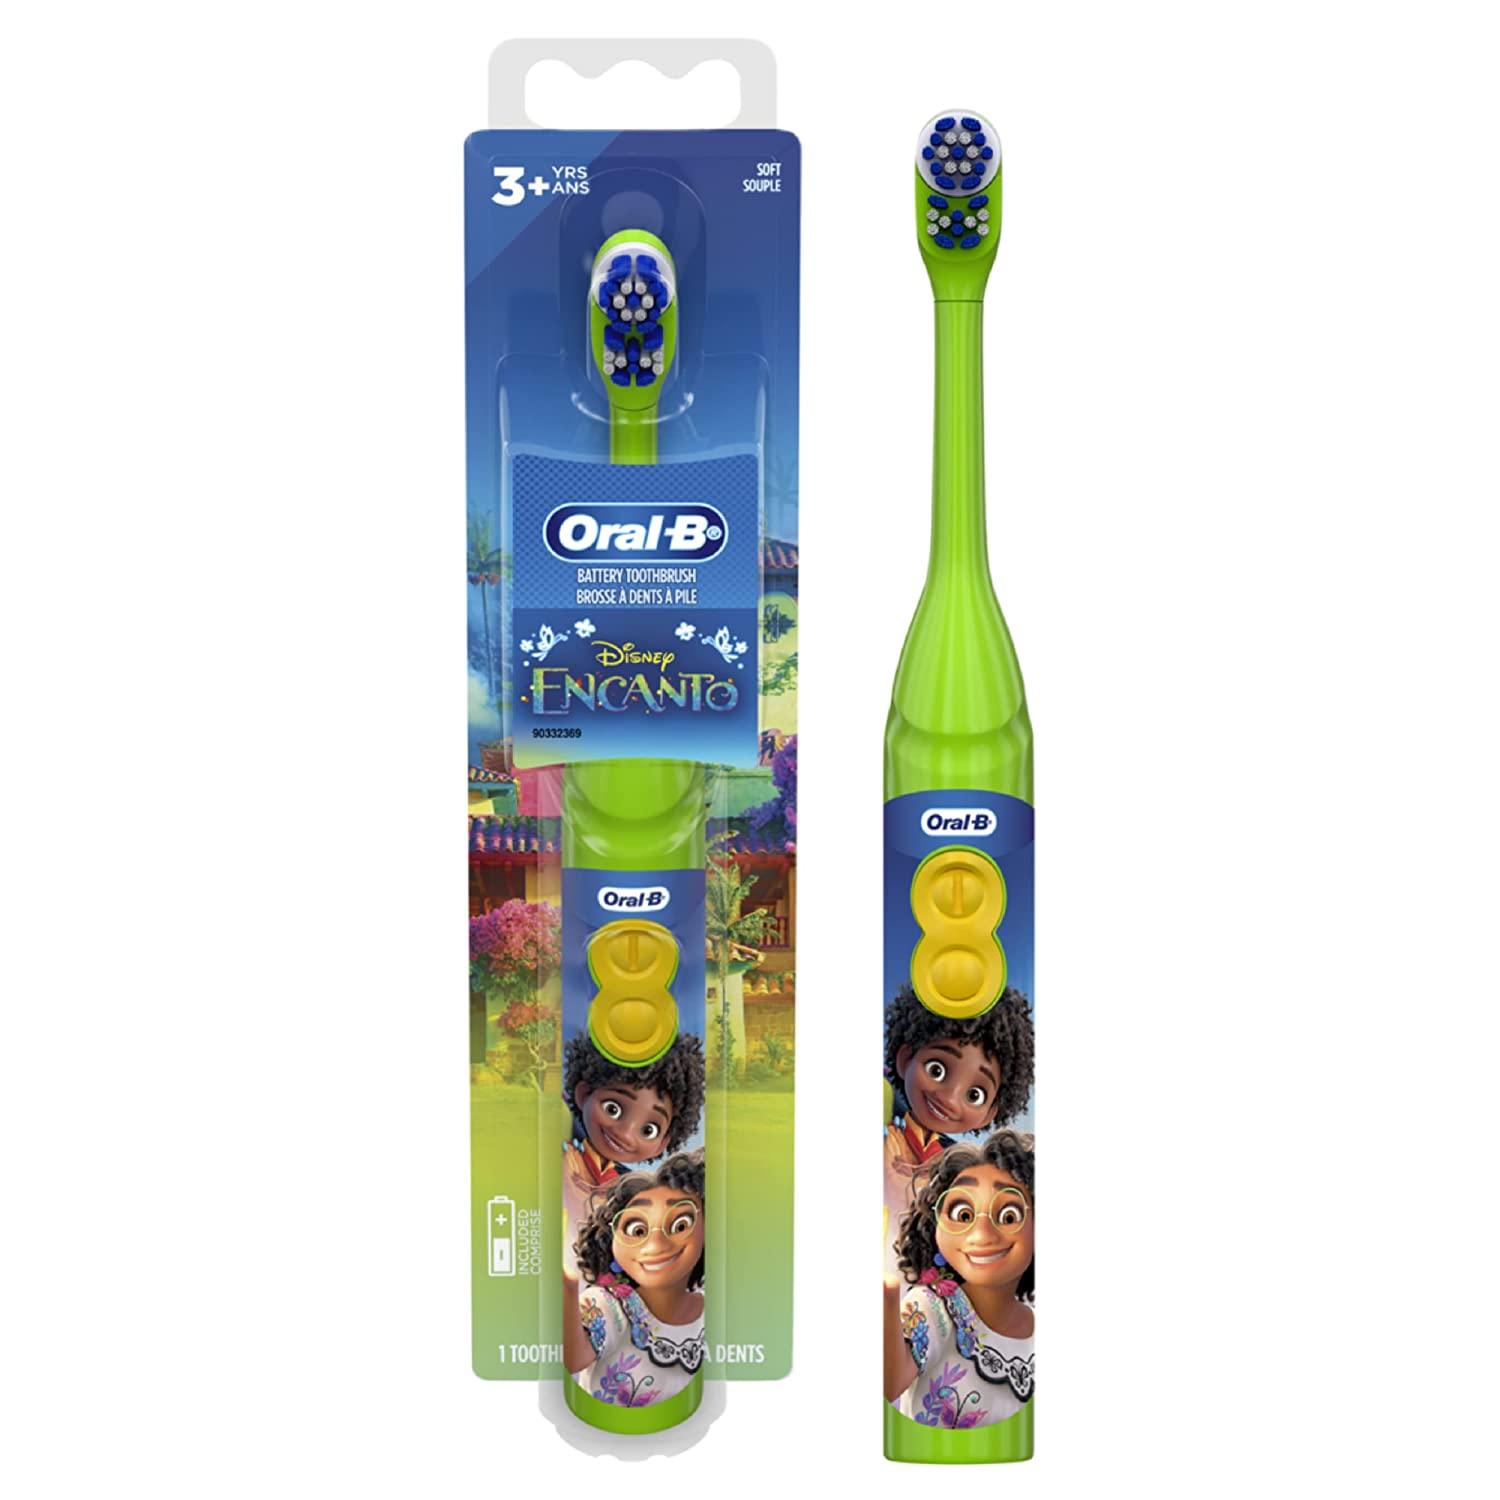 Oral-B Kid's Battery Toothbrush Featuring Disney's Encanto, Soft Bristles